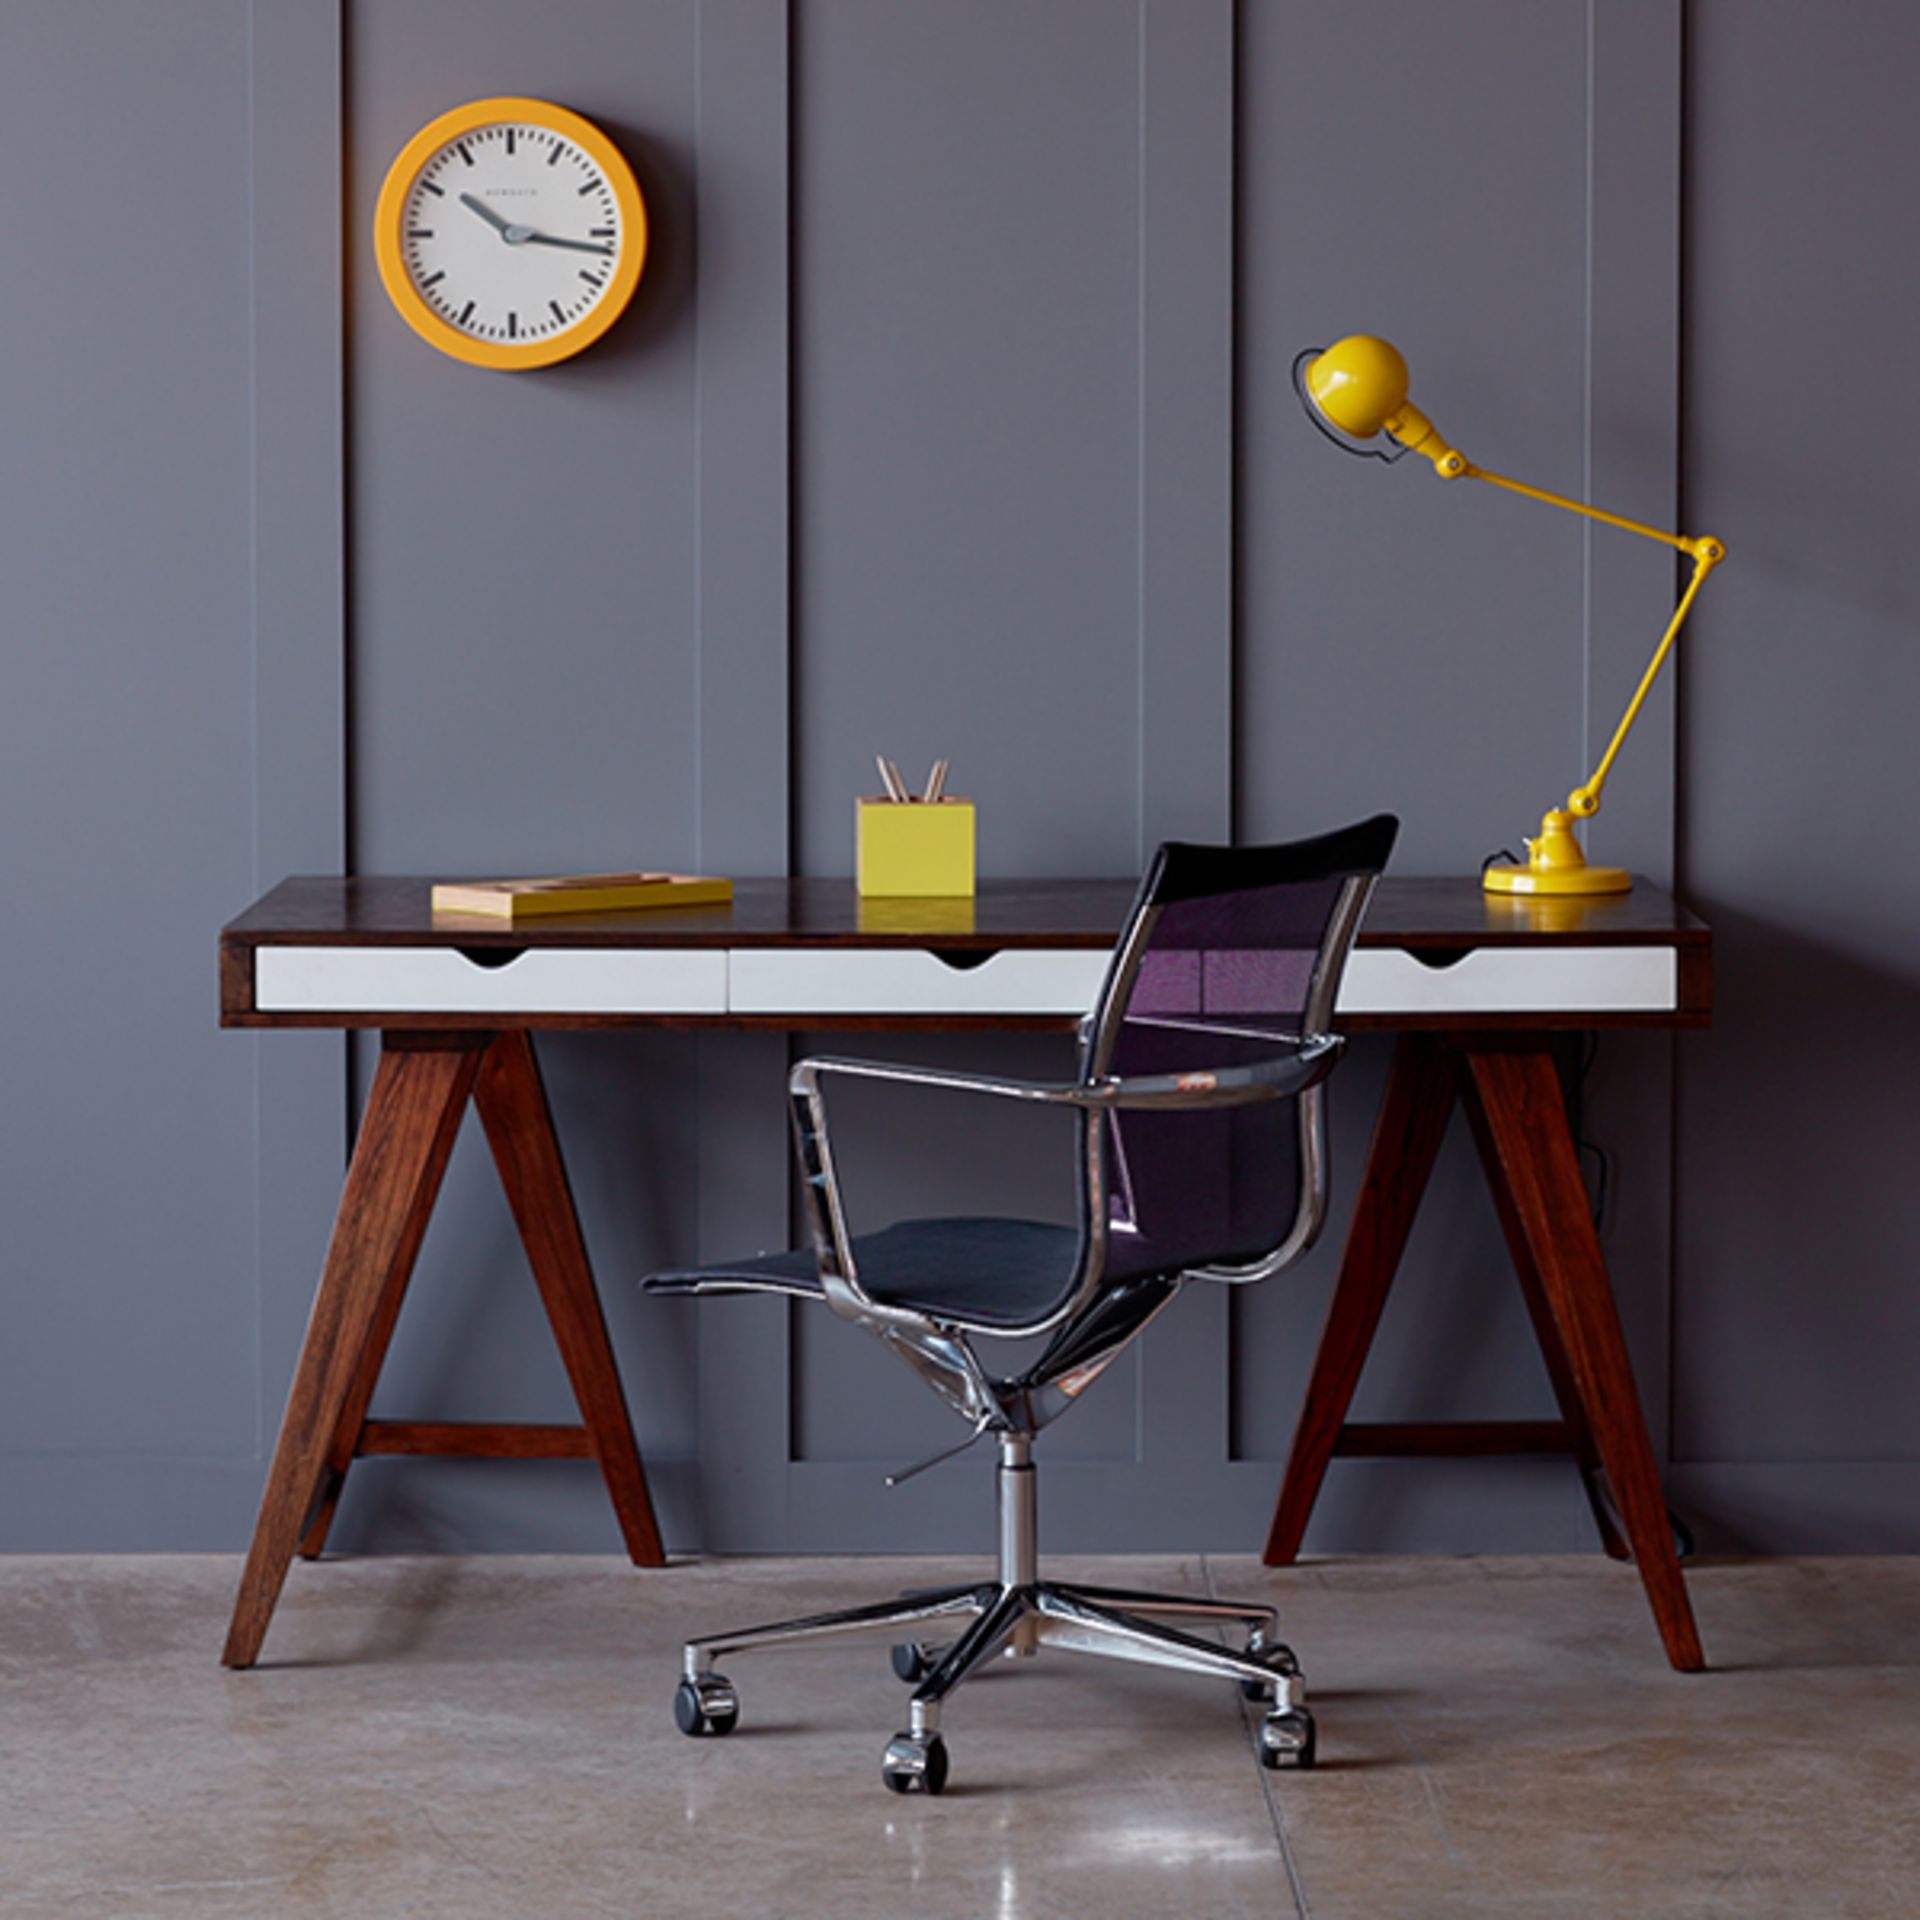 1 x Blue Suntree Ellwood Trestle Desk With a Dark Walnut Finish - RRP £280.00!